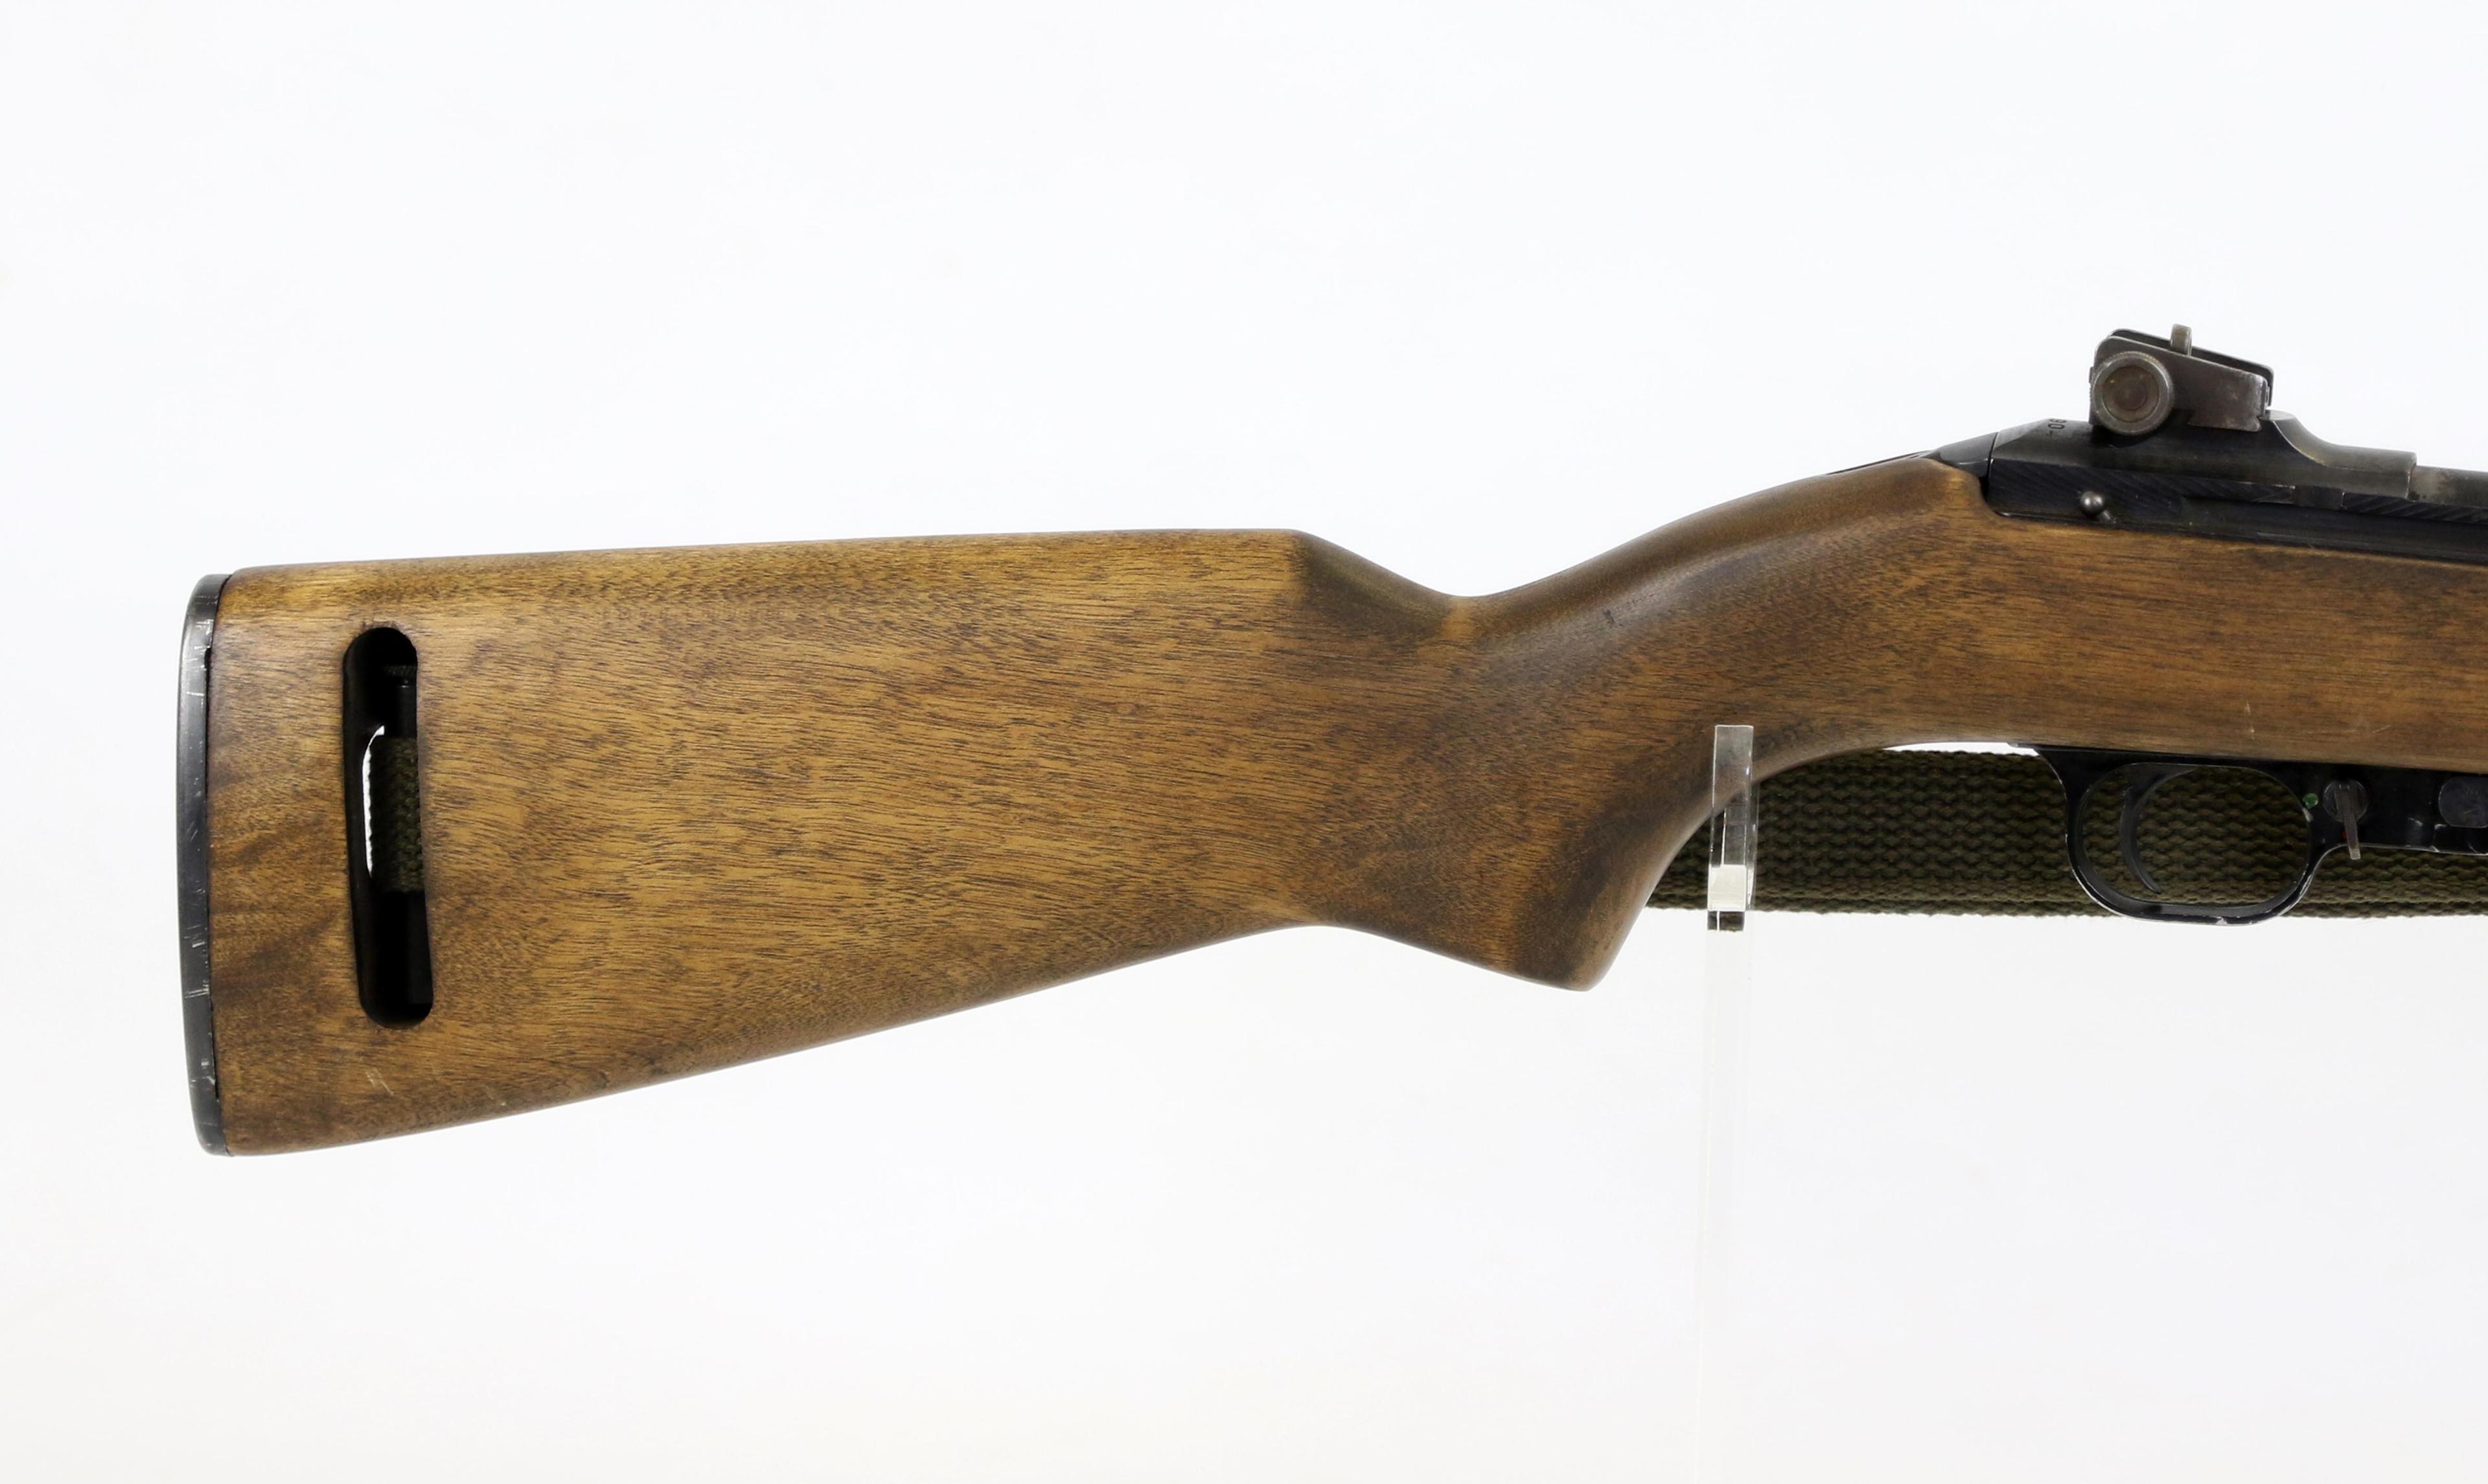 Universal 30 cal mod M-1 carbine rifle semi- auto w/ sling ser# 386904